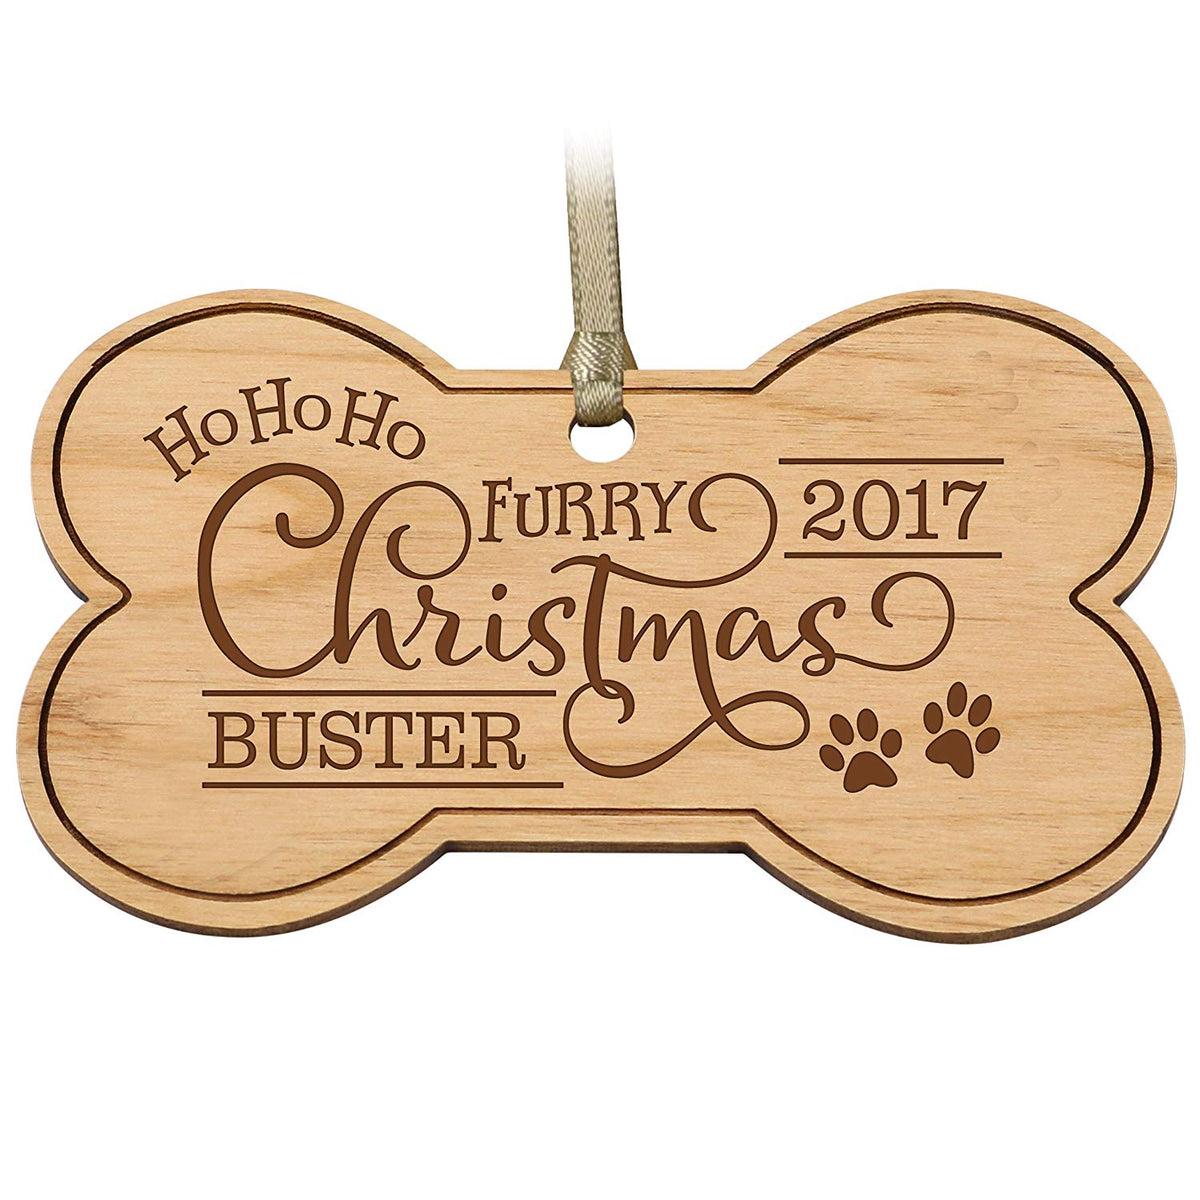 Personalized Pet Christmas Ornament - Furry Christmas - LifeSong Milestones